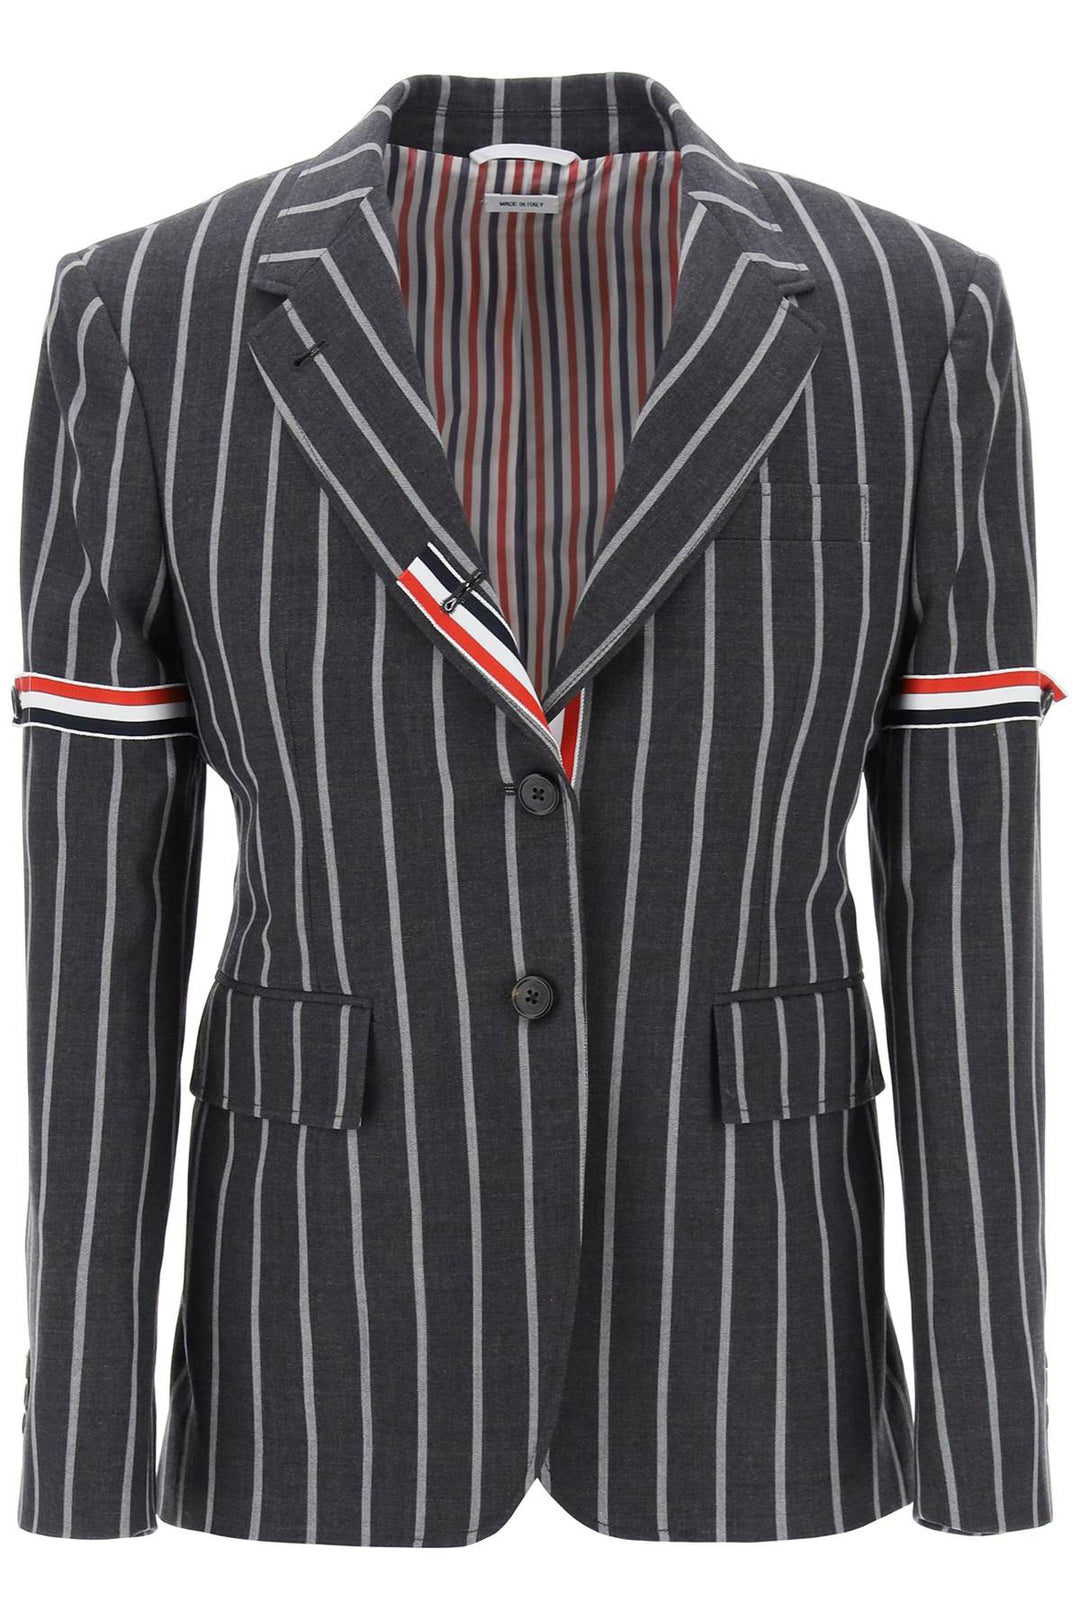 Thom Browne Striped Single Breasted Jacket   Grigio